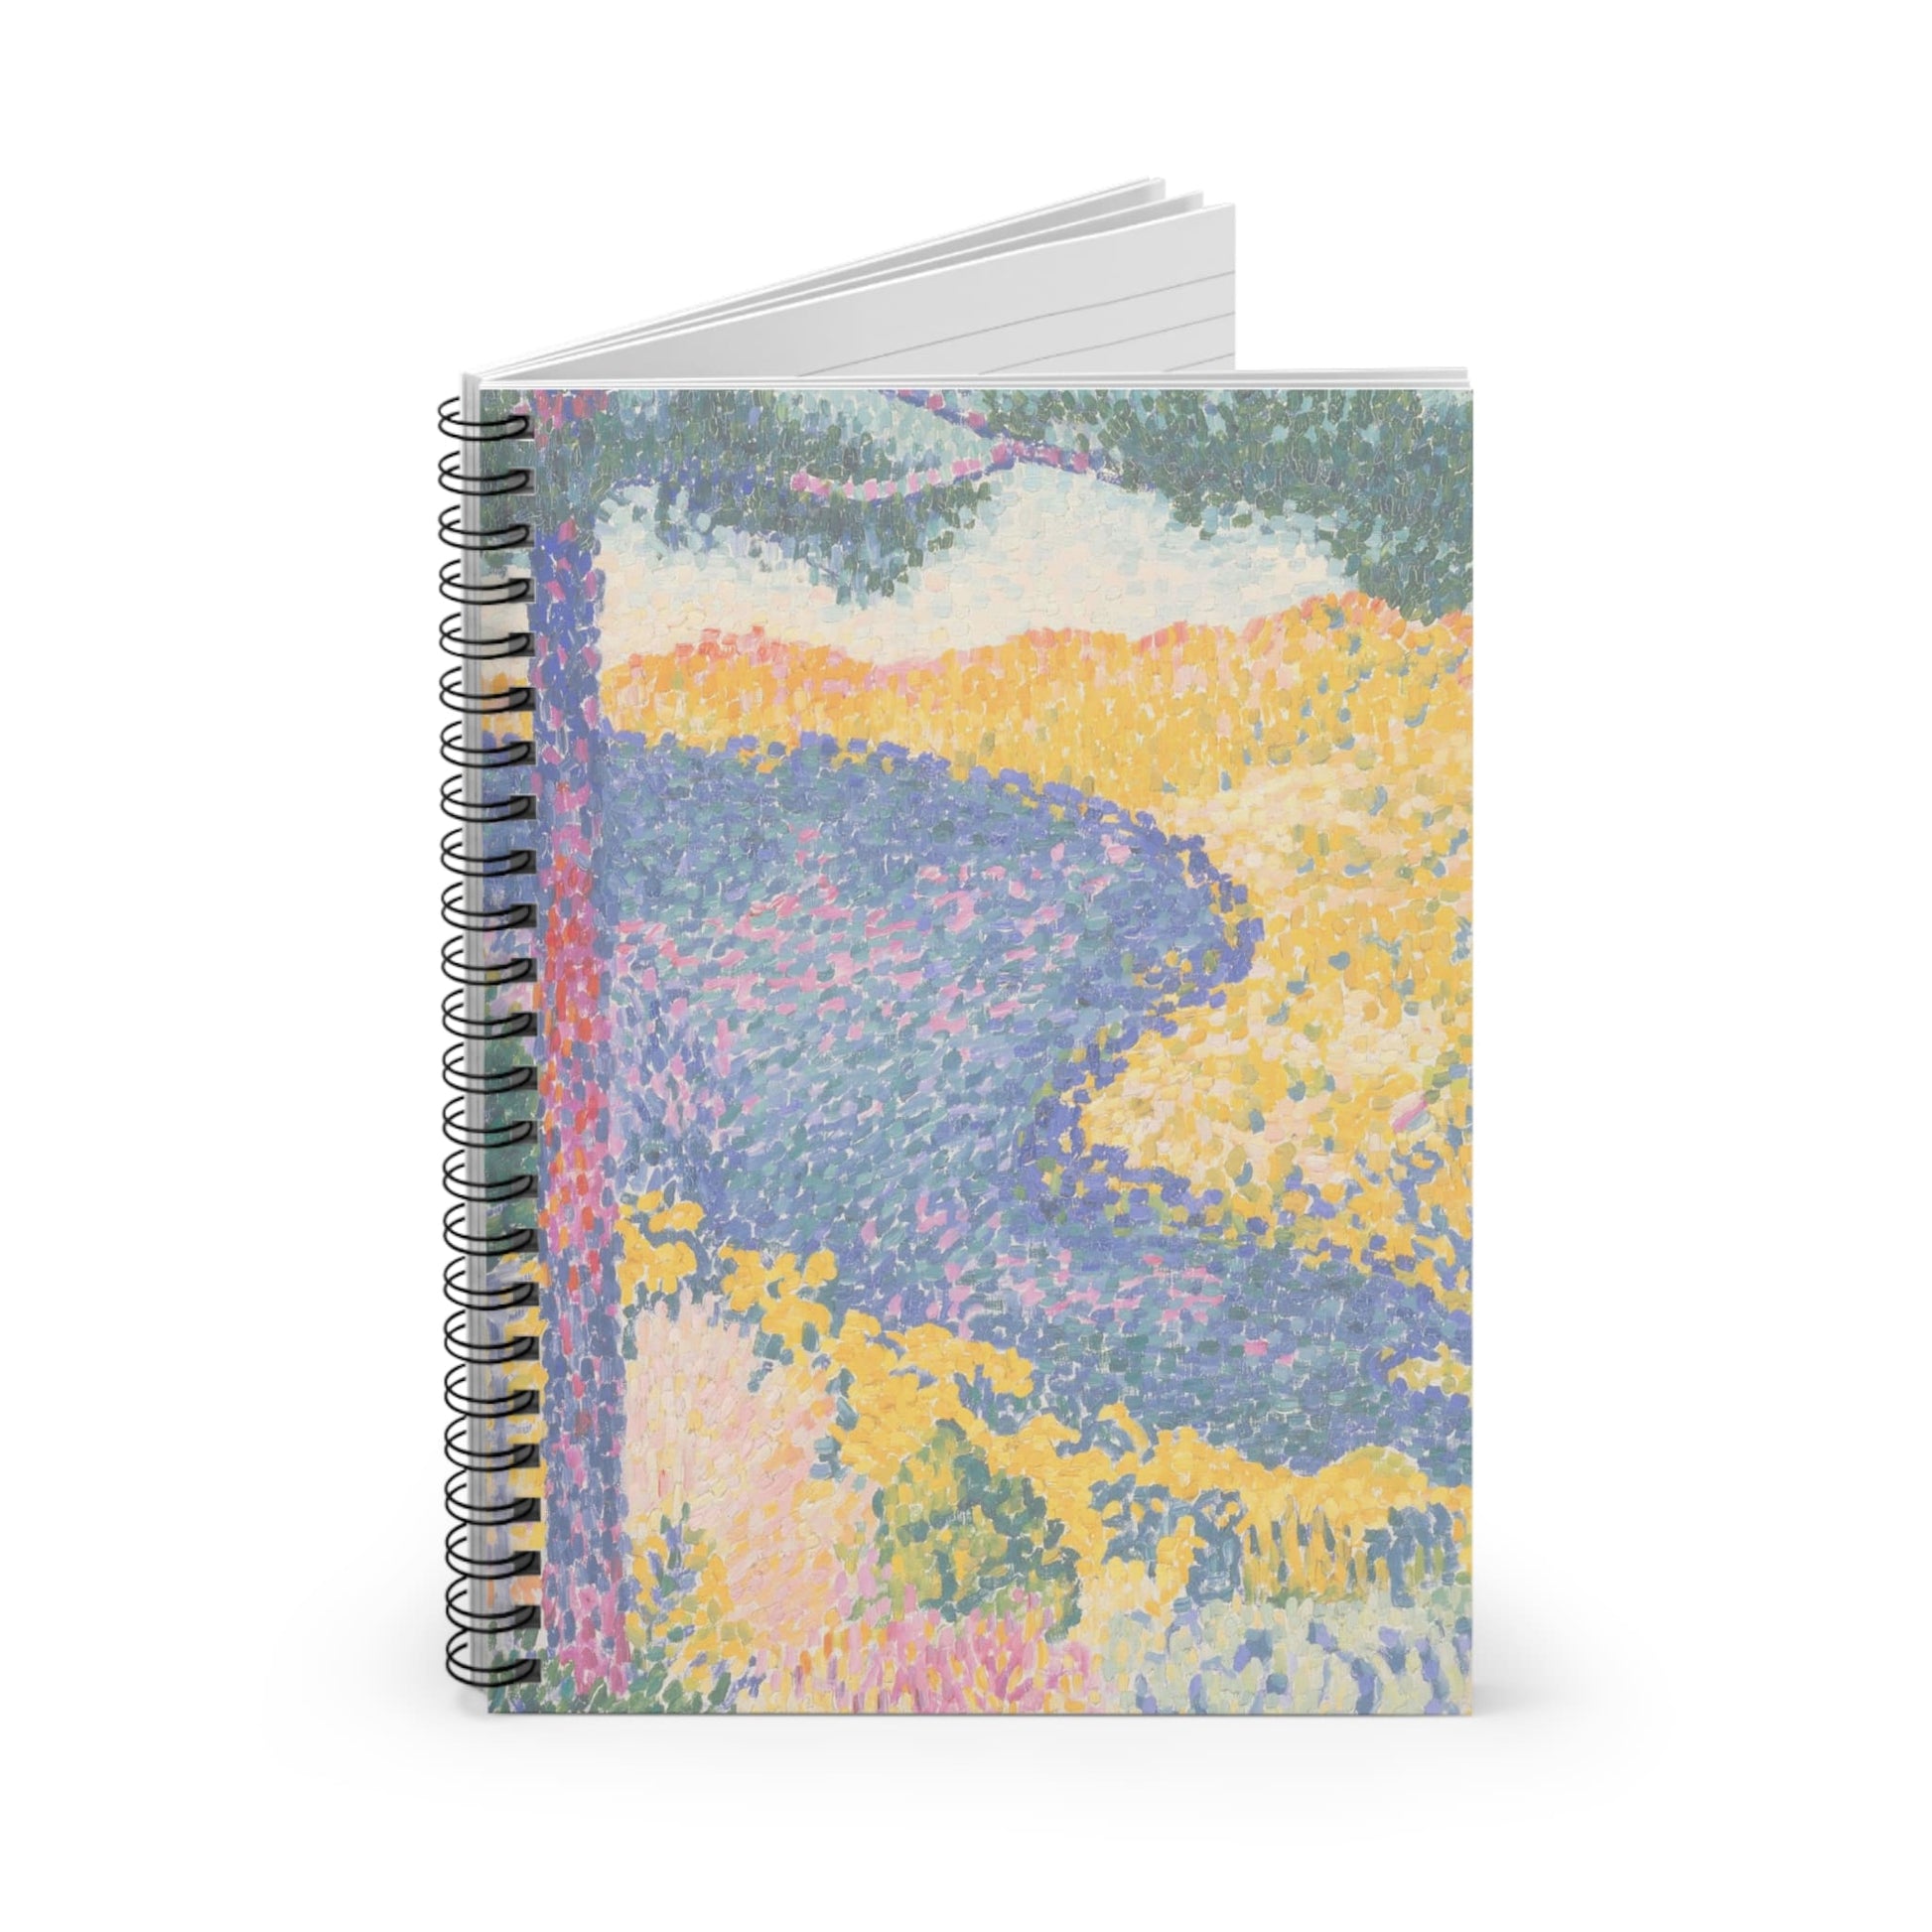 Colorful Landscape Spiral Notebook Standing up on White Desk